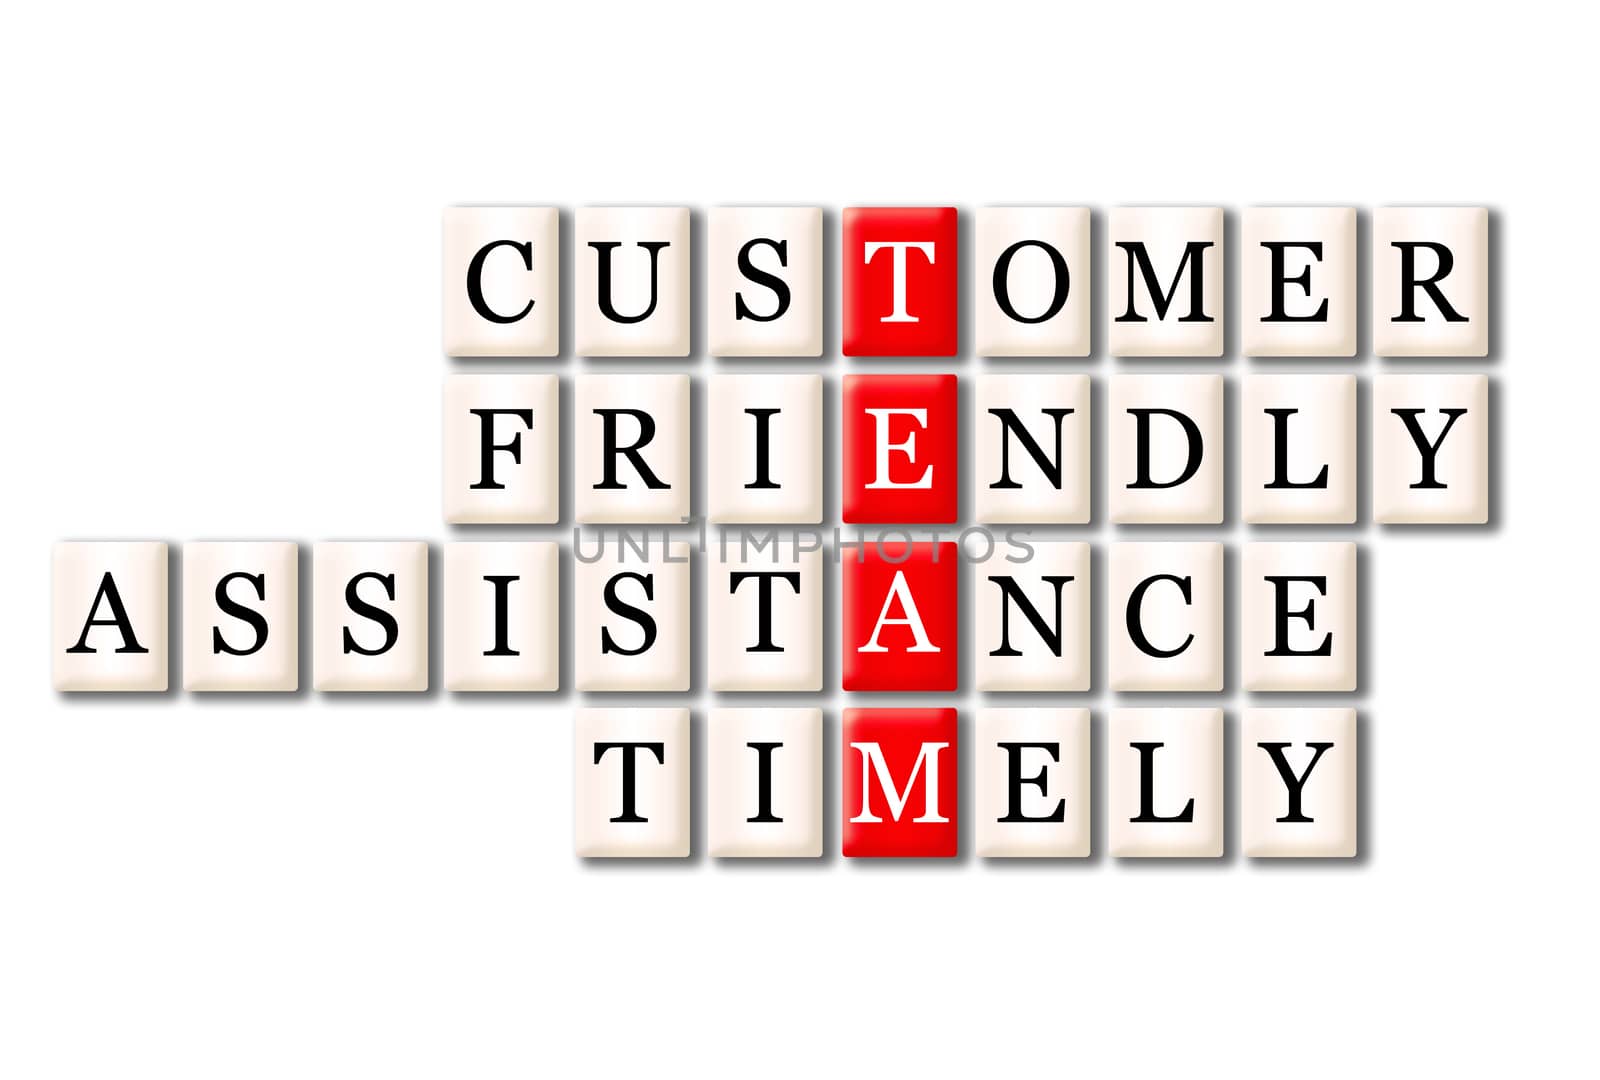 Acronym of Team - customer friendlyservice,timely